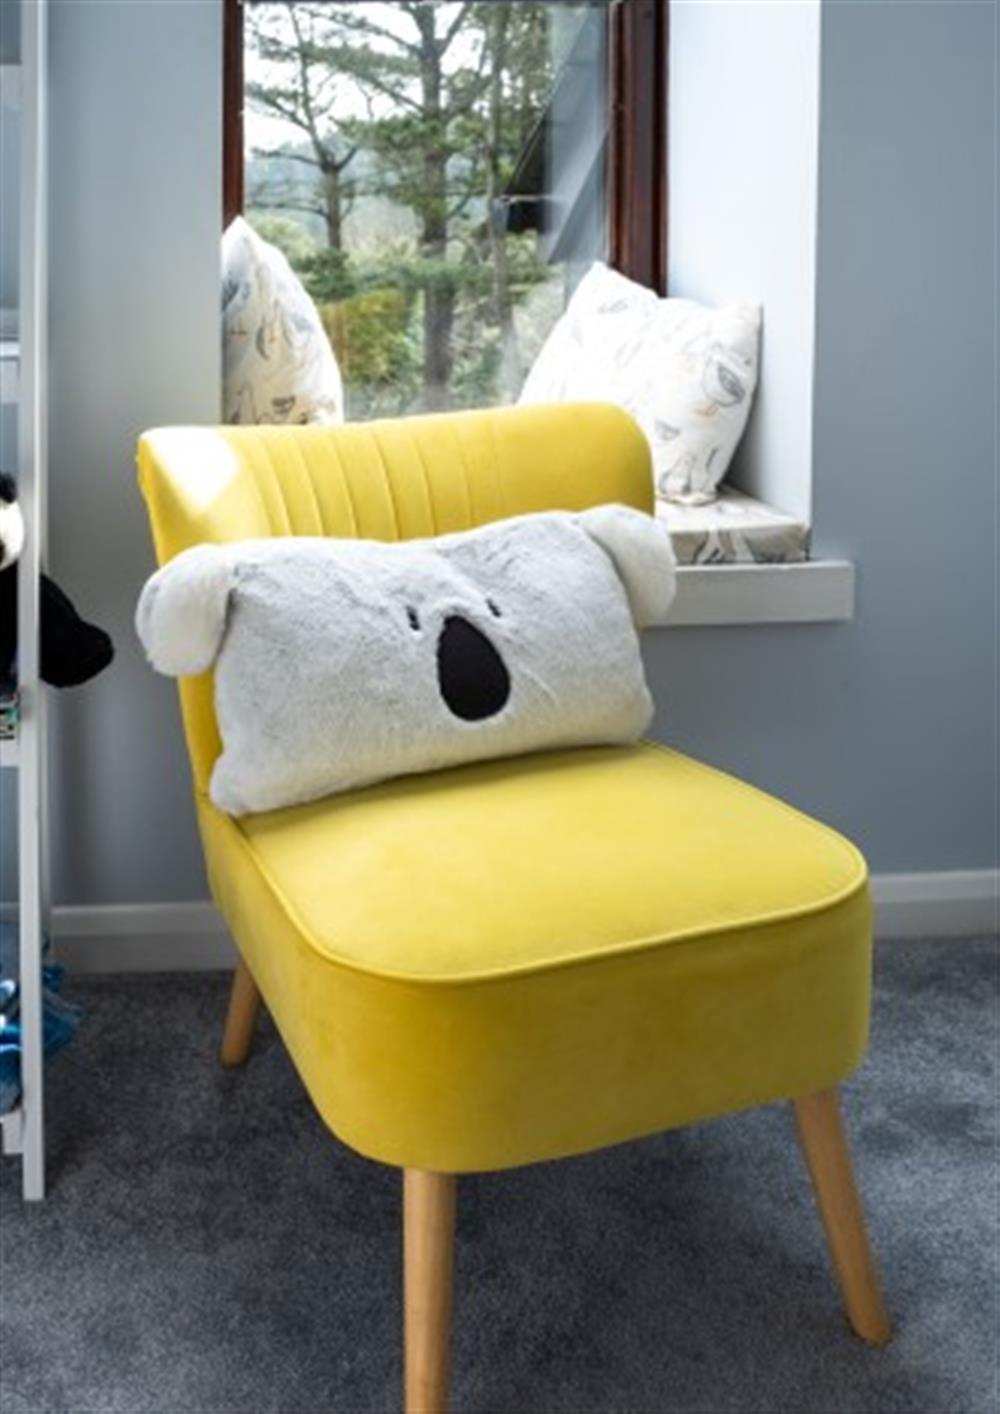 We love this cute koala cushion in the bunk room.